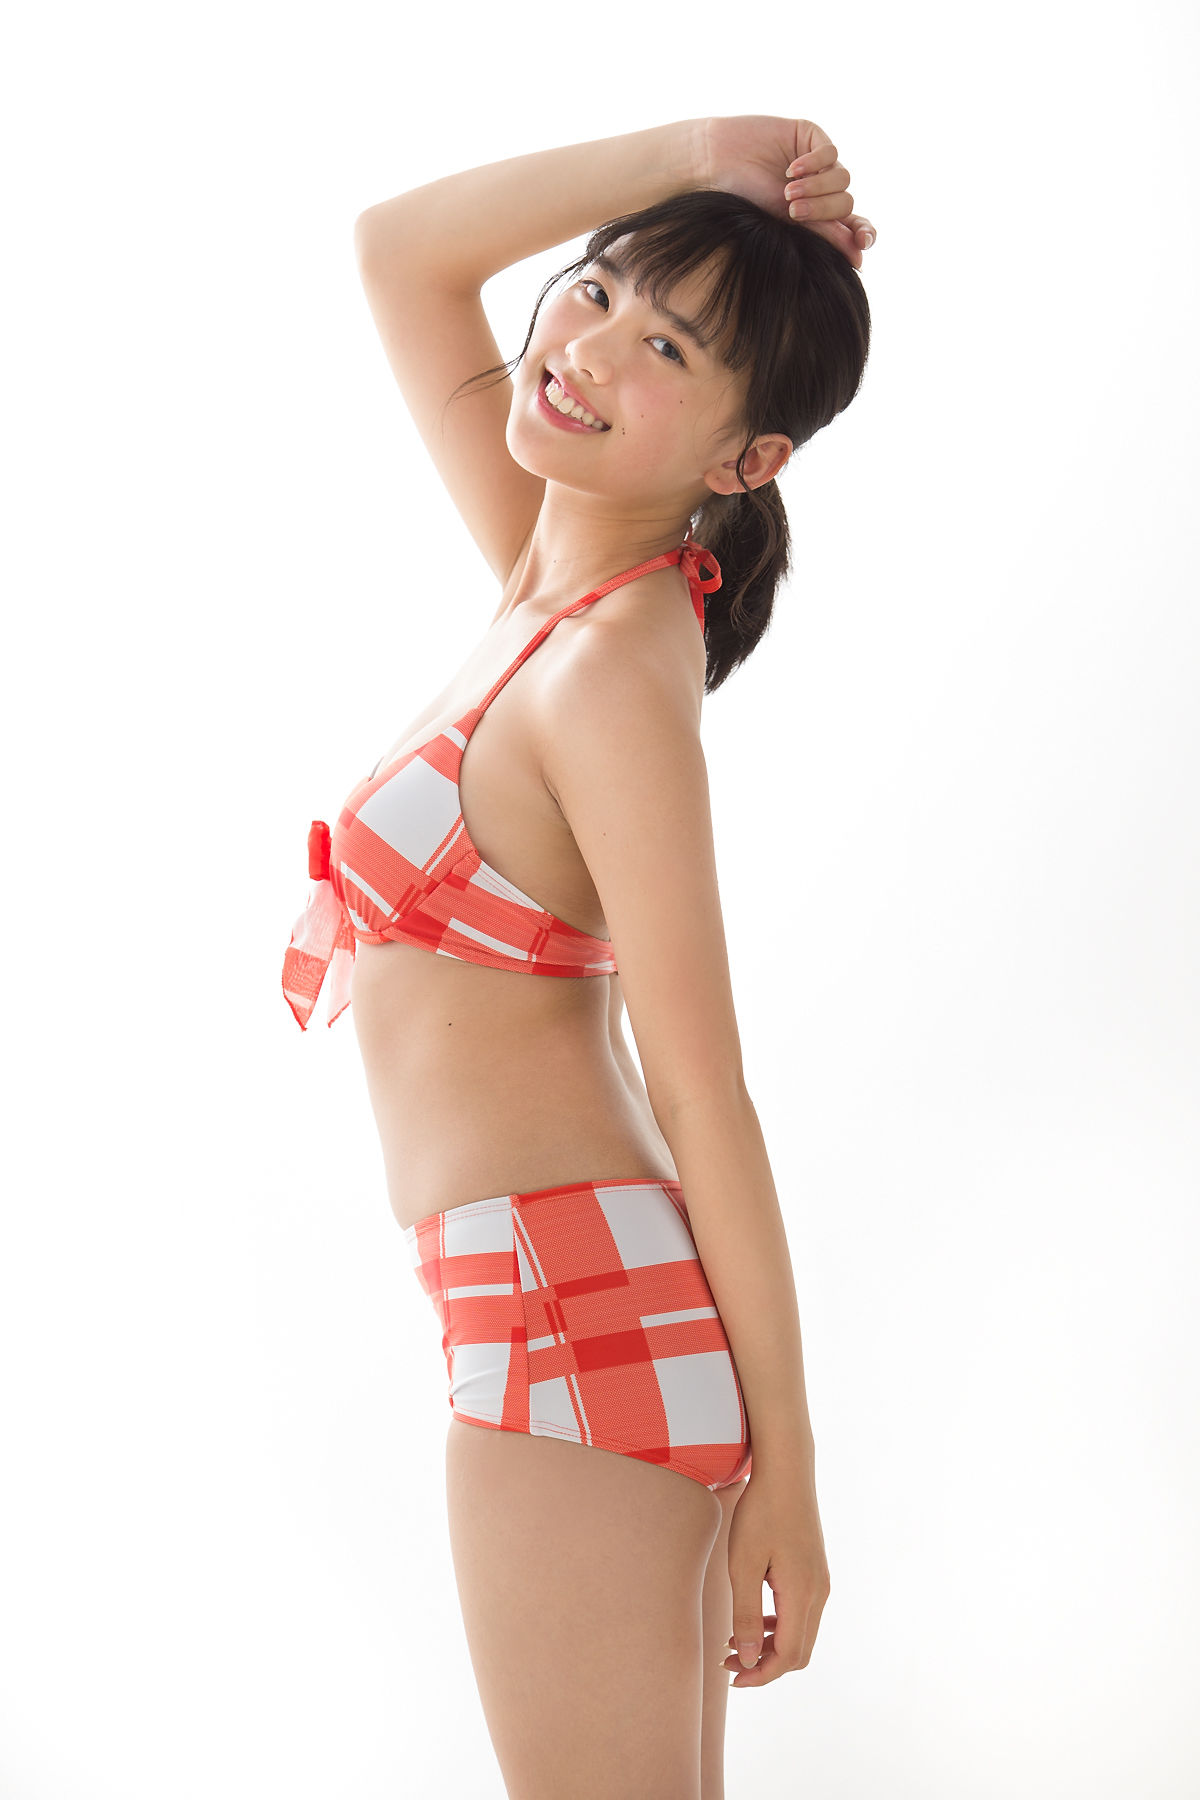 [Minisuka.tv] Sarina Kashiwagi 柏木さりな - Premium Gallery 2.7